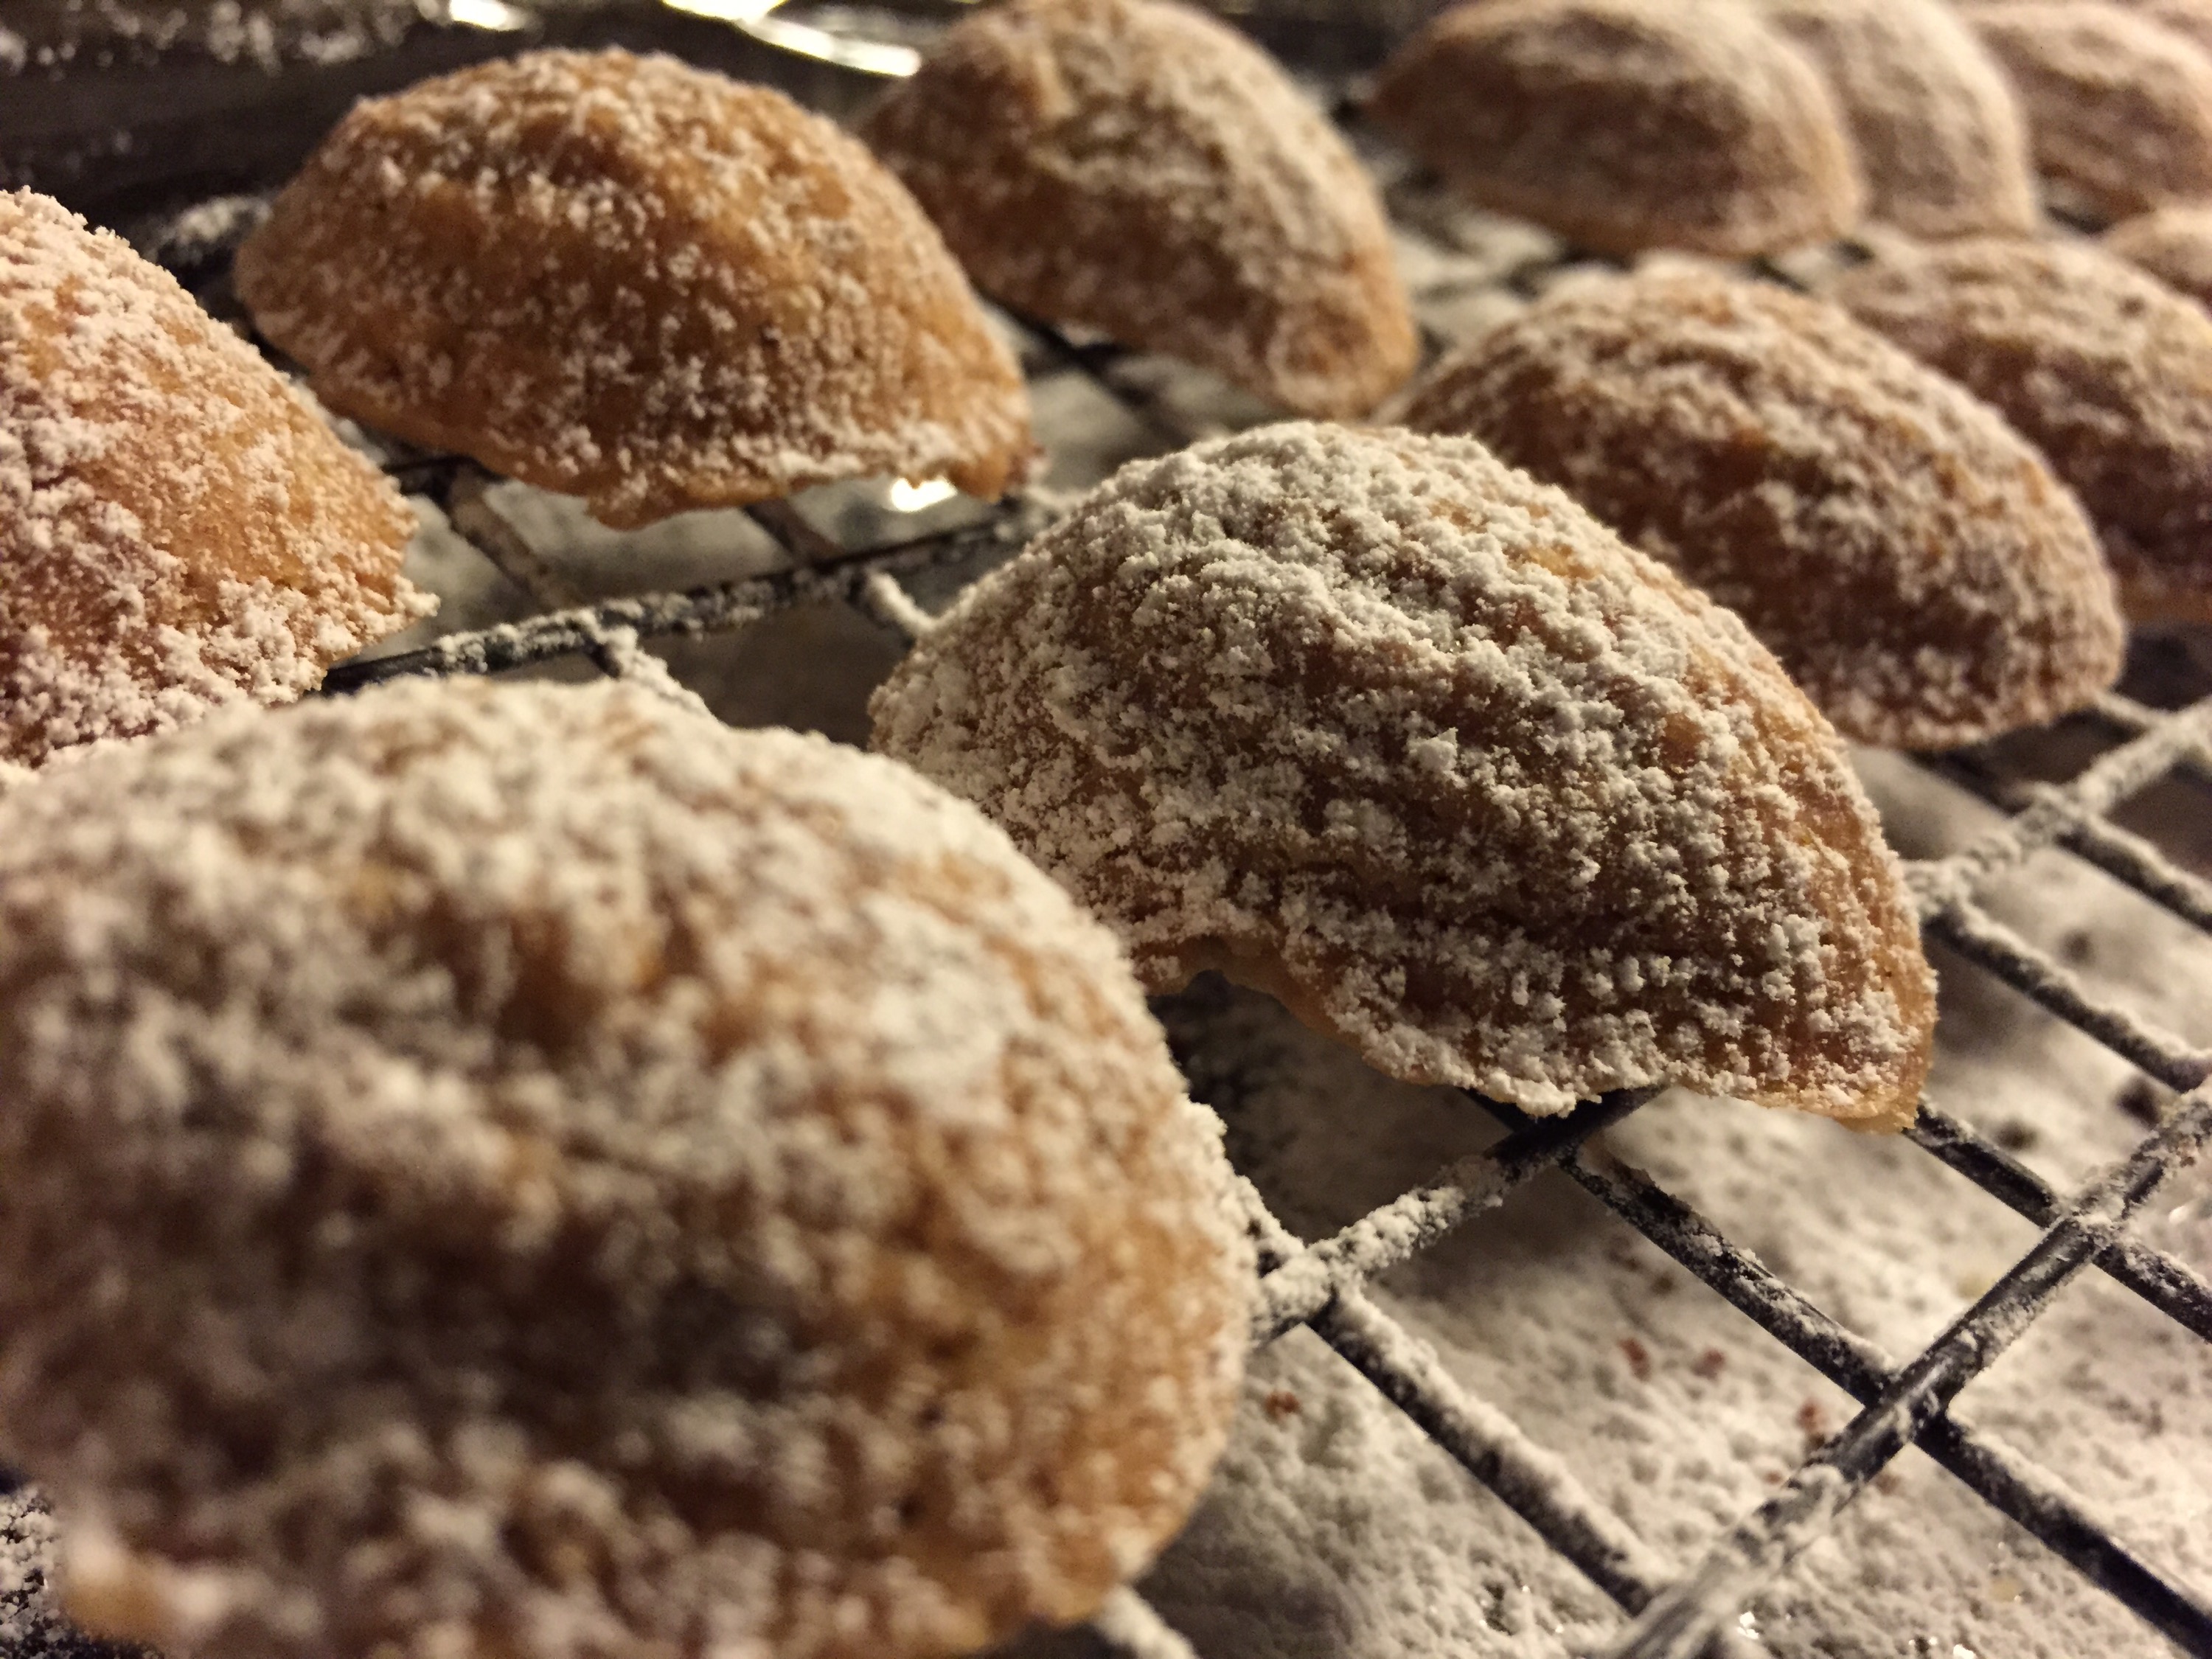 Walnut Cookies dusted in sugar